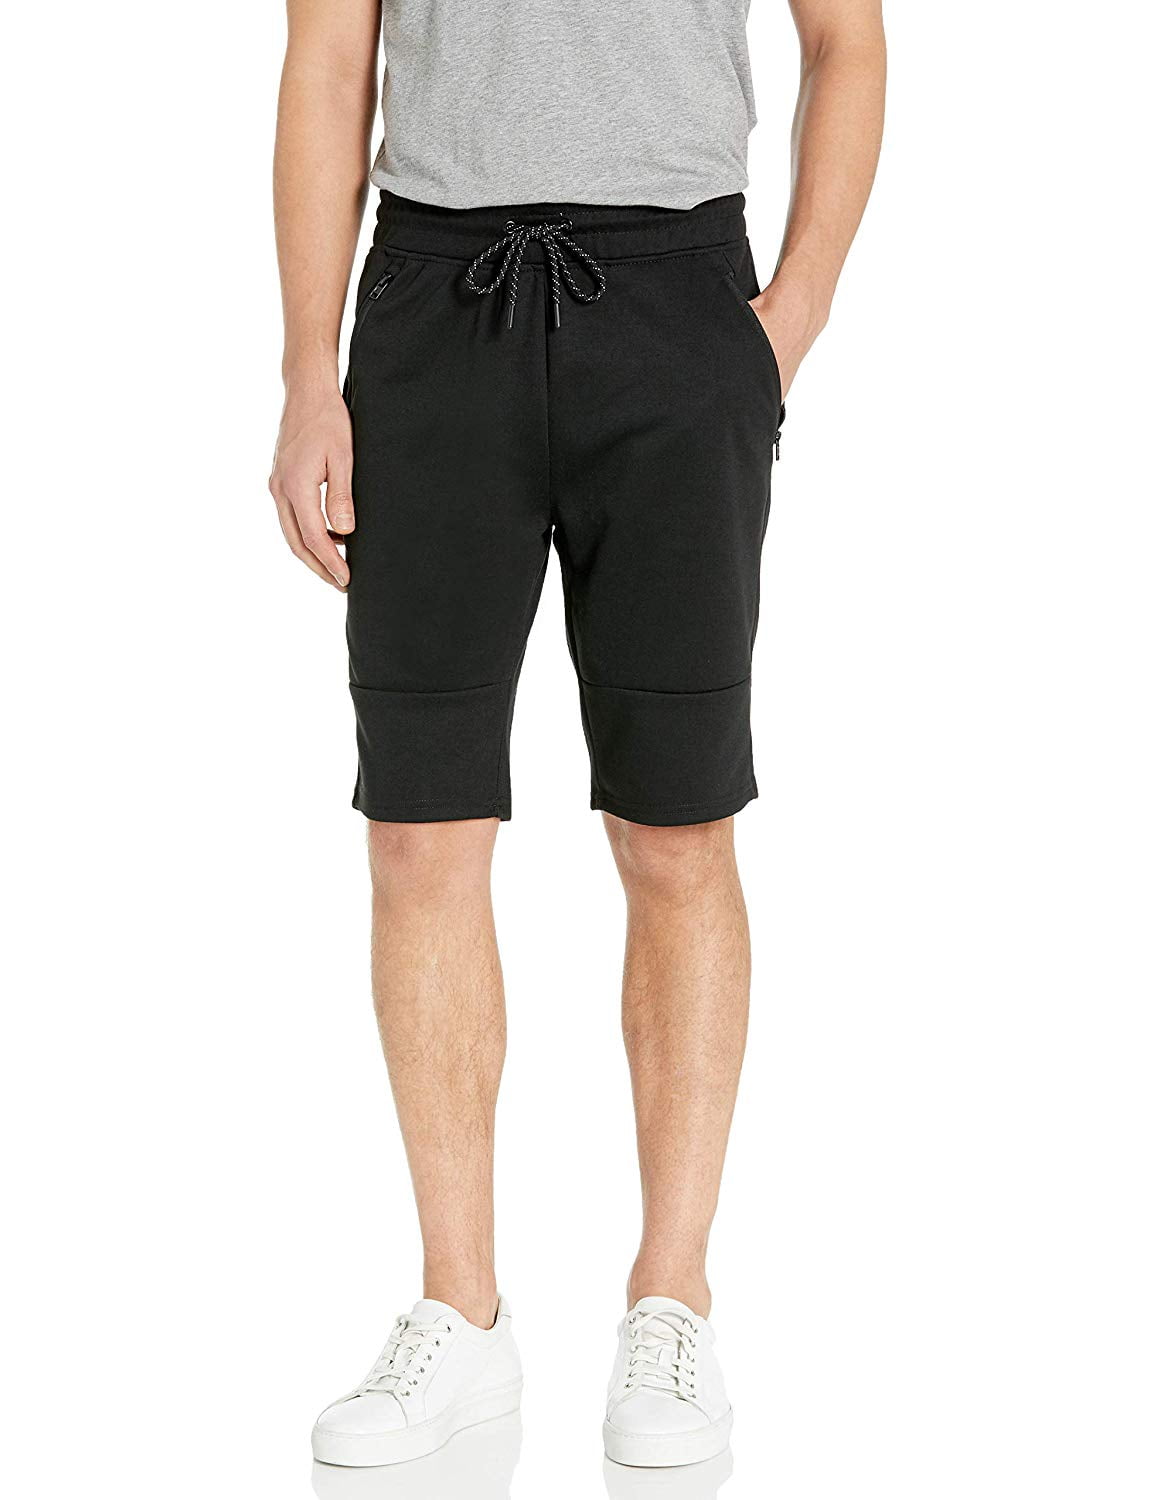 SOUTHPOLE - Southpole Mens Basic Tech Shorts, Adult - Walmart.com ...